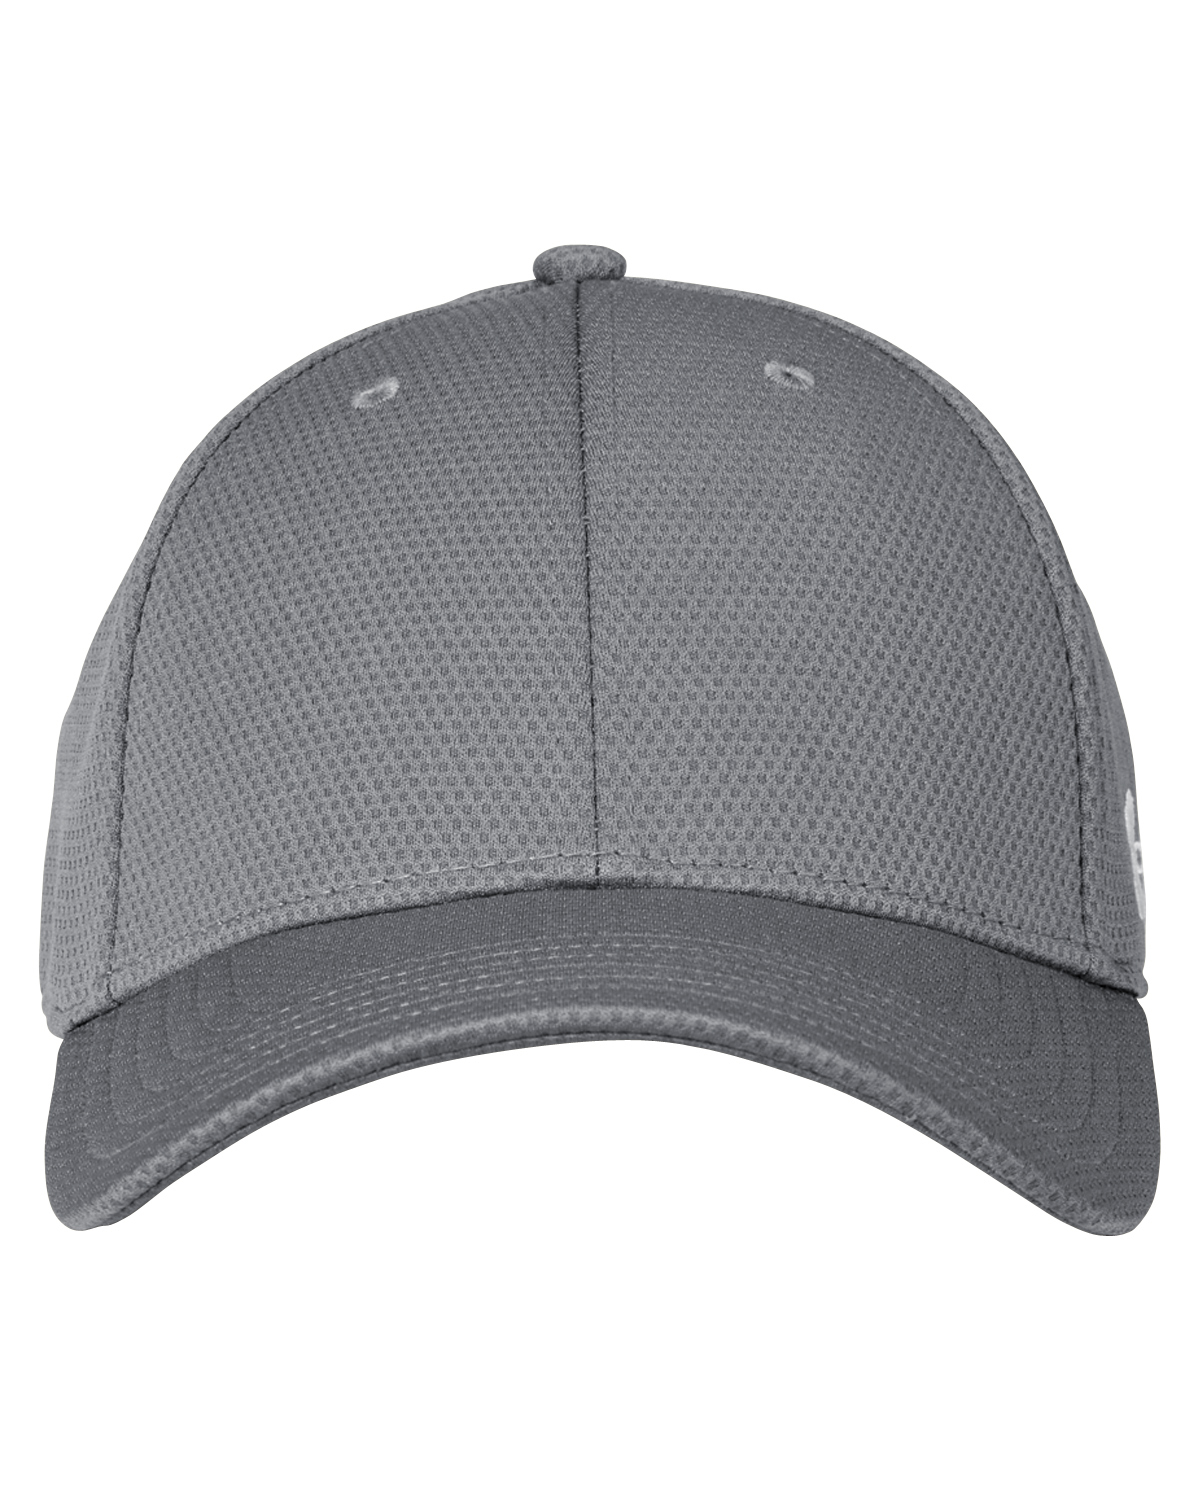 NW Headwear – Curved Bill Solid Cap 